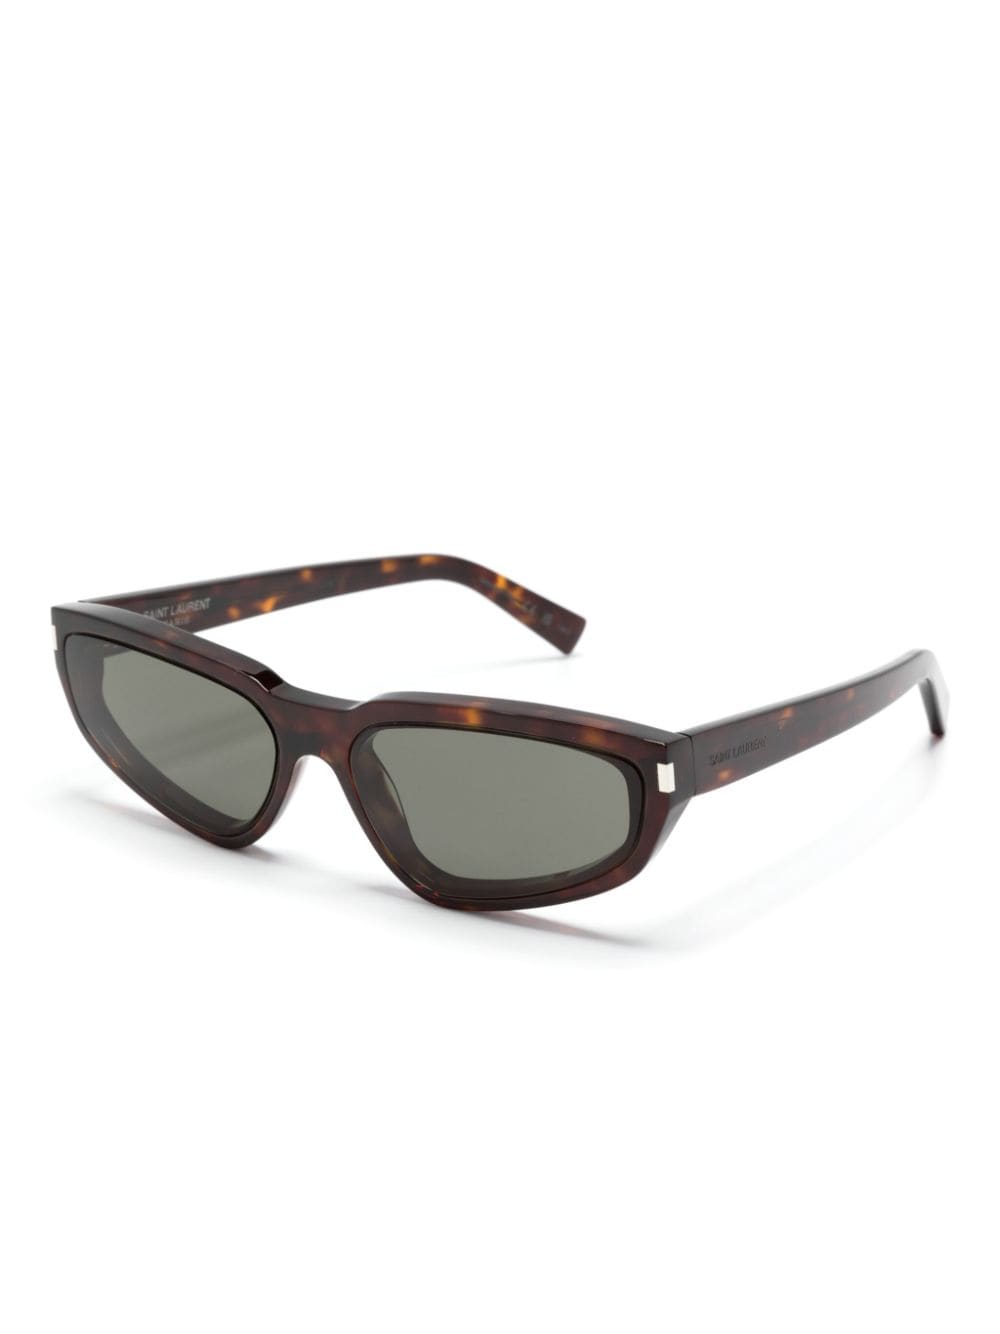 Saint Laurent Eyewear Nova tortoiseshell sunglasses - Bruin